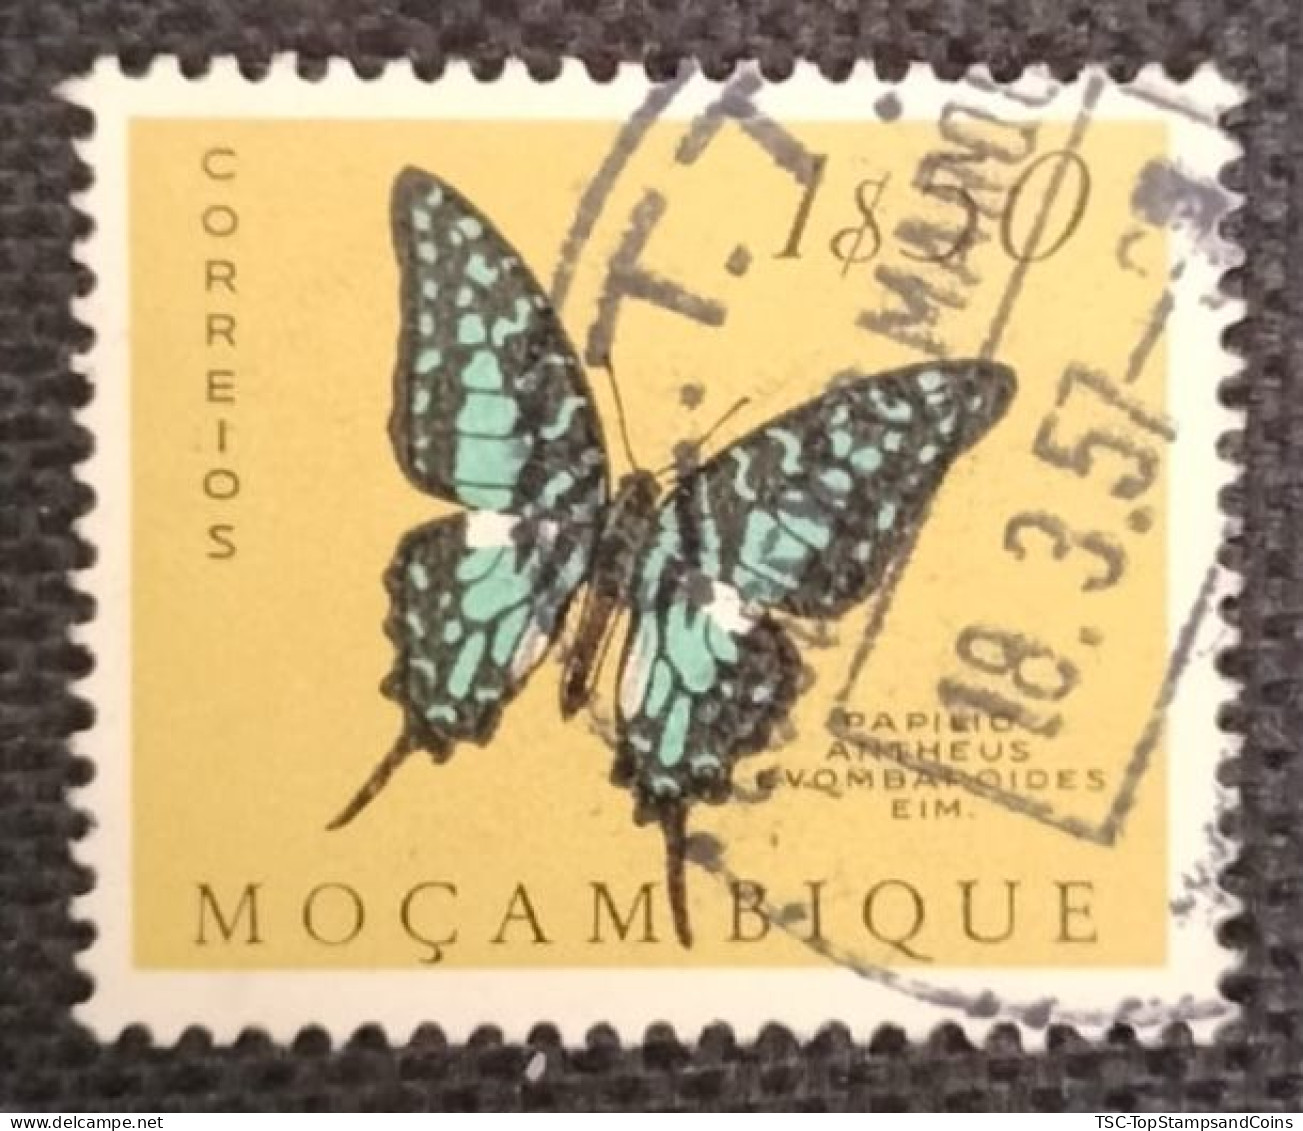 MOZPO0396U6 - Mozambique Butterflies  - 1$50 Used Stamp - Mozambique - 1953 - Mozambique